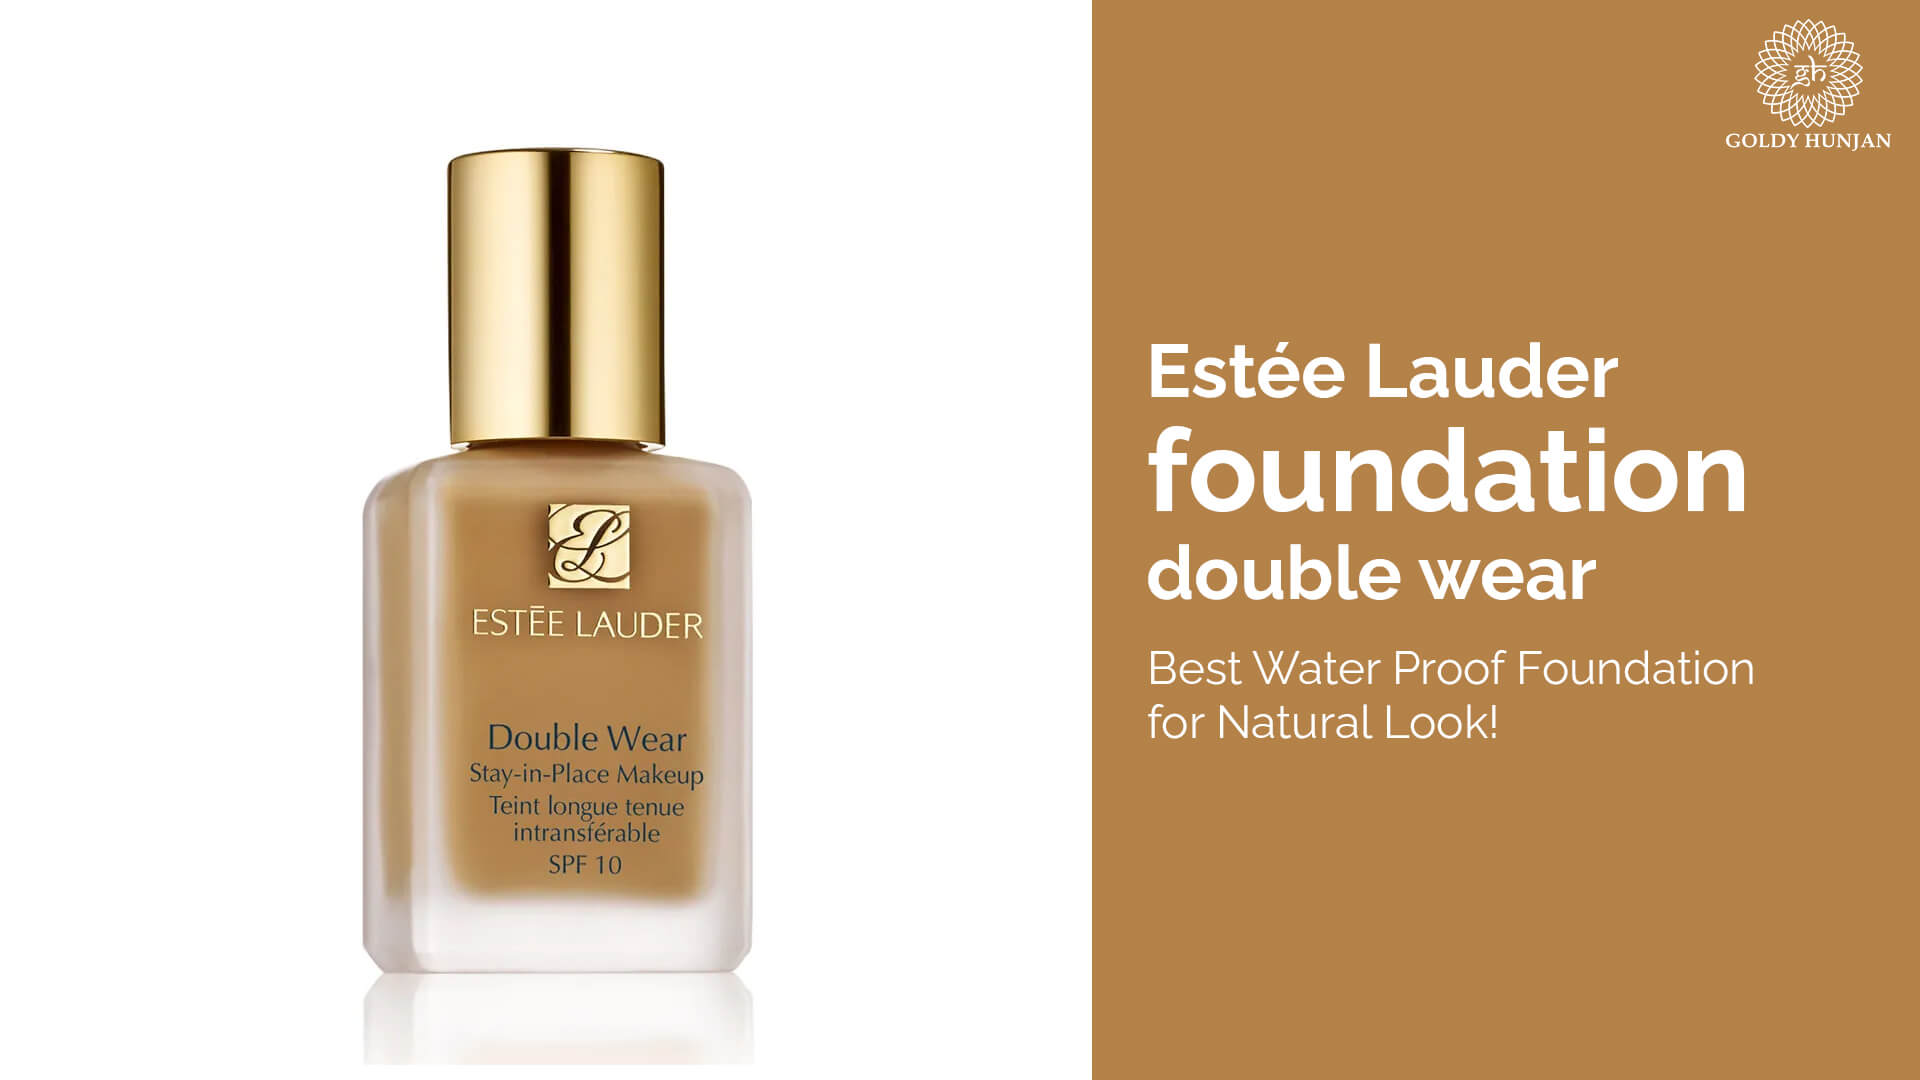 Estee Lauder foundation double wear